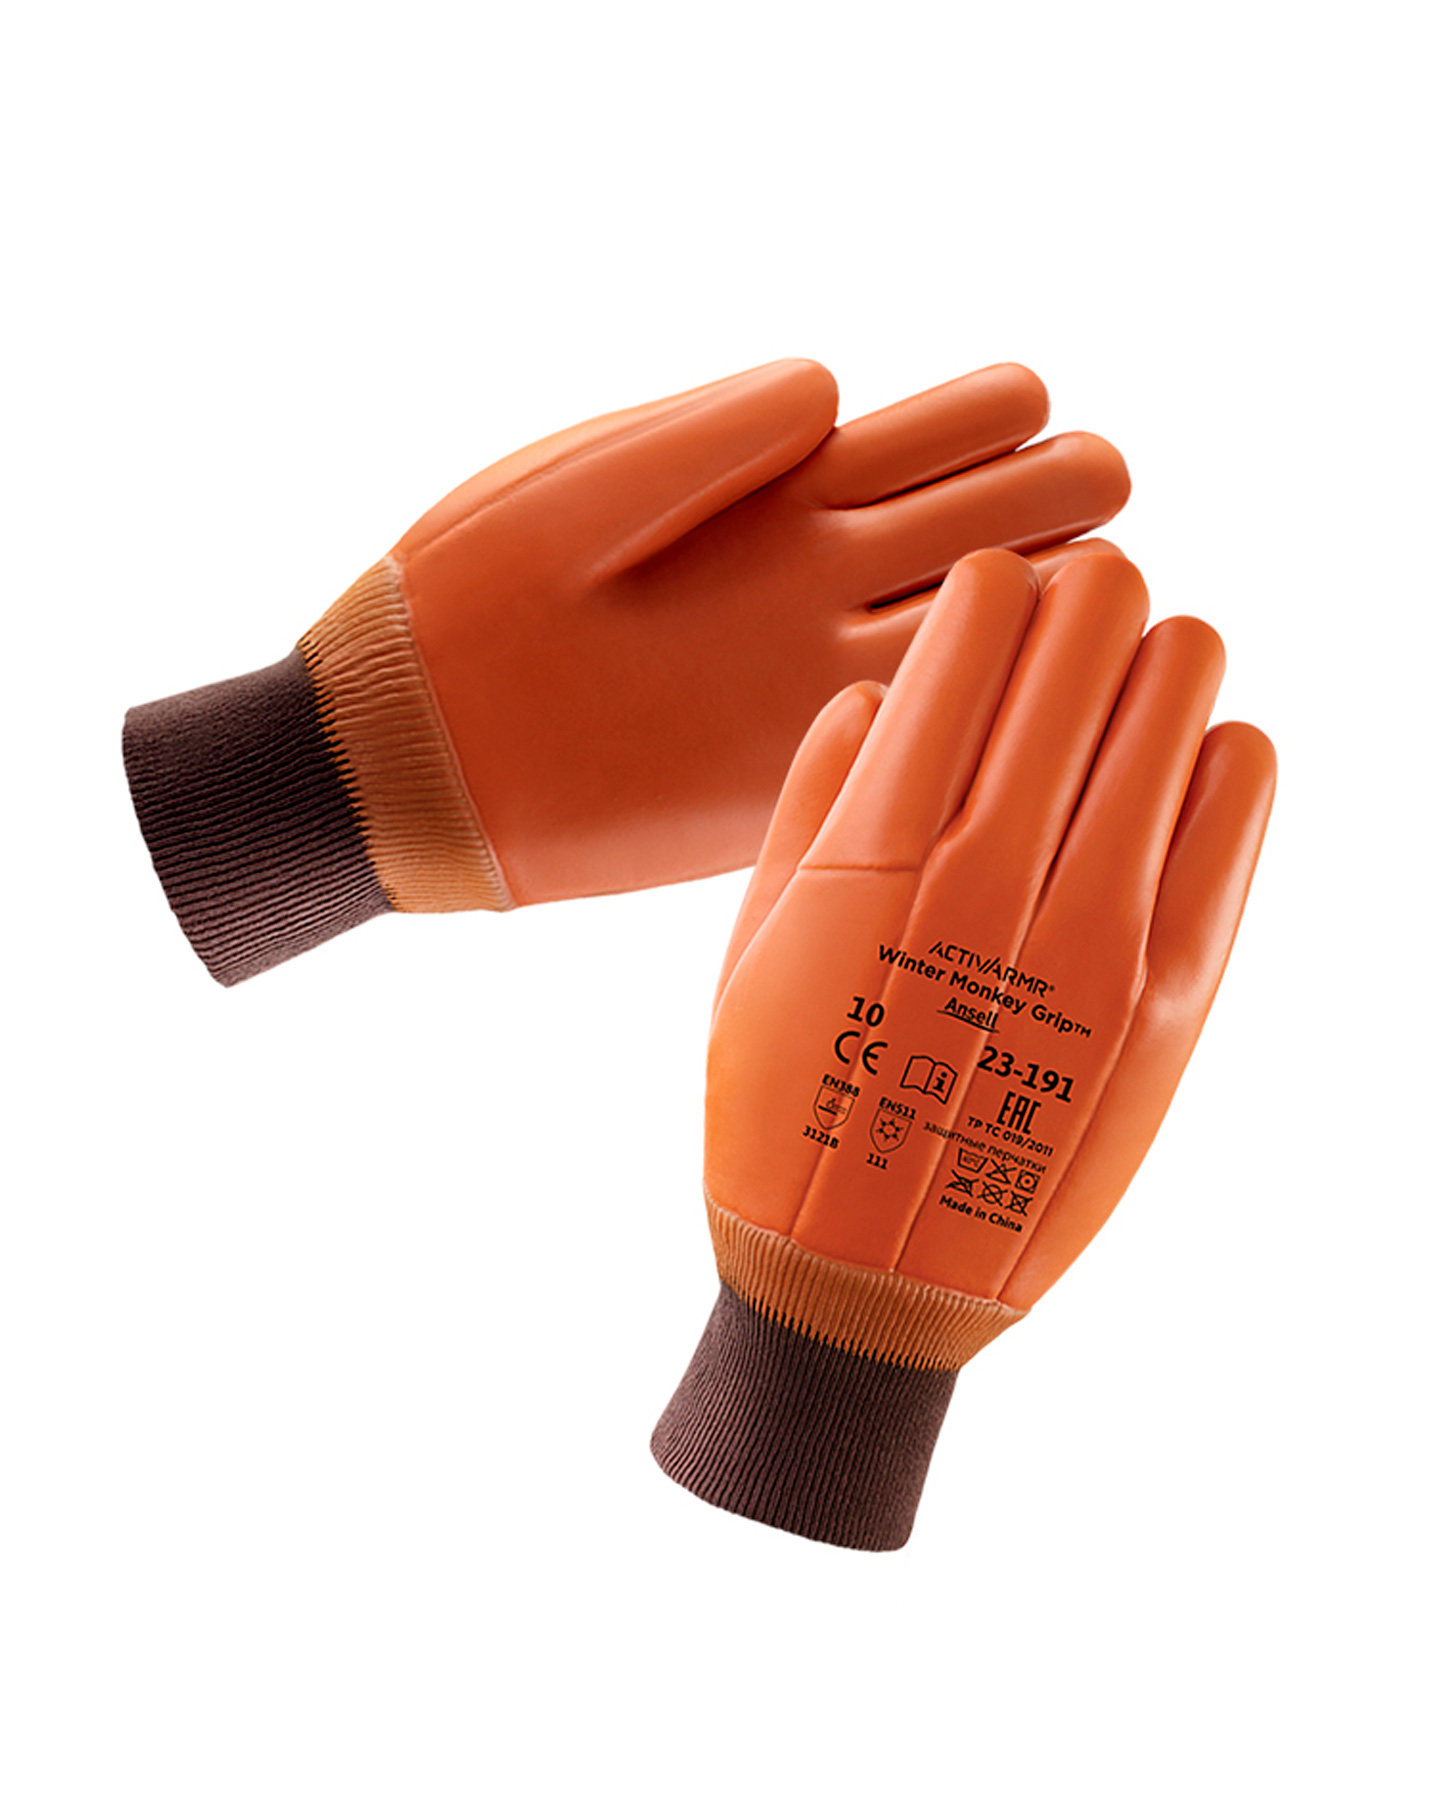 Ansell Winter Monkey Grip® Gloves - Smooth, L/XL S-19713 - Uline